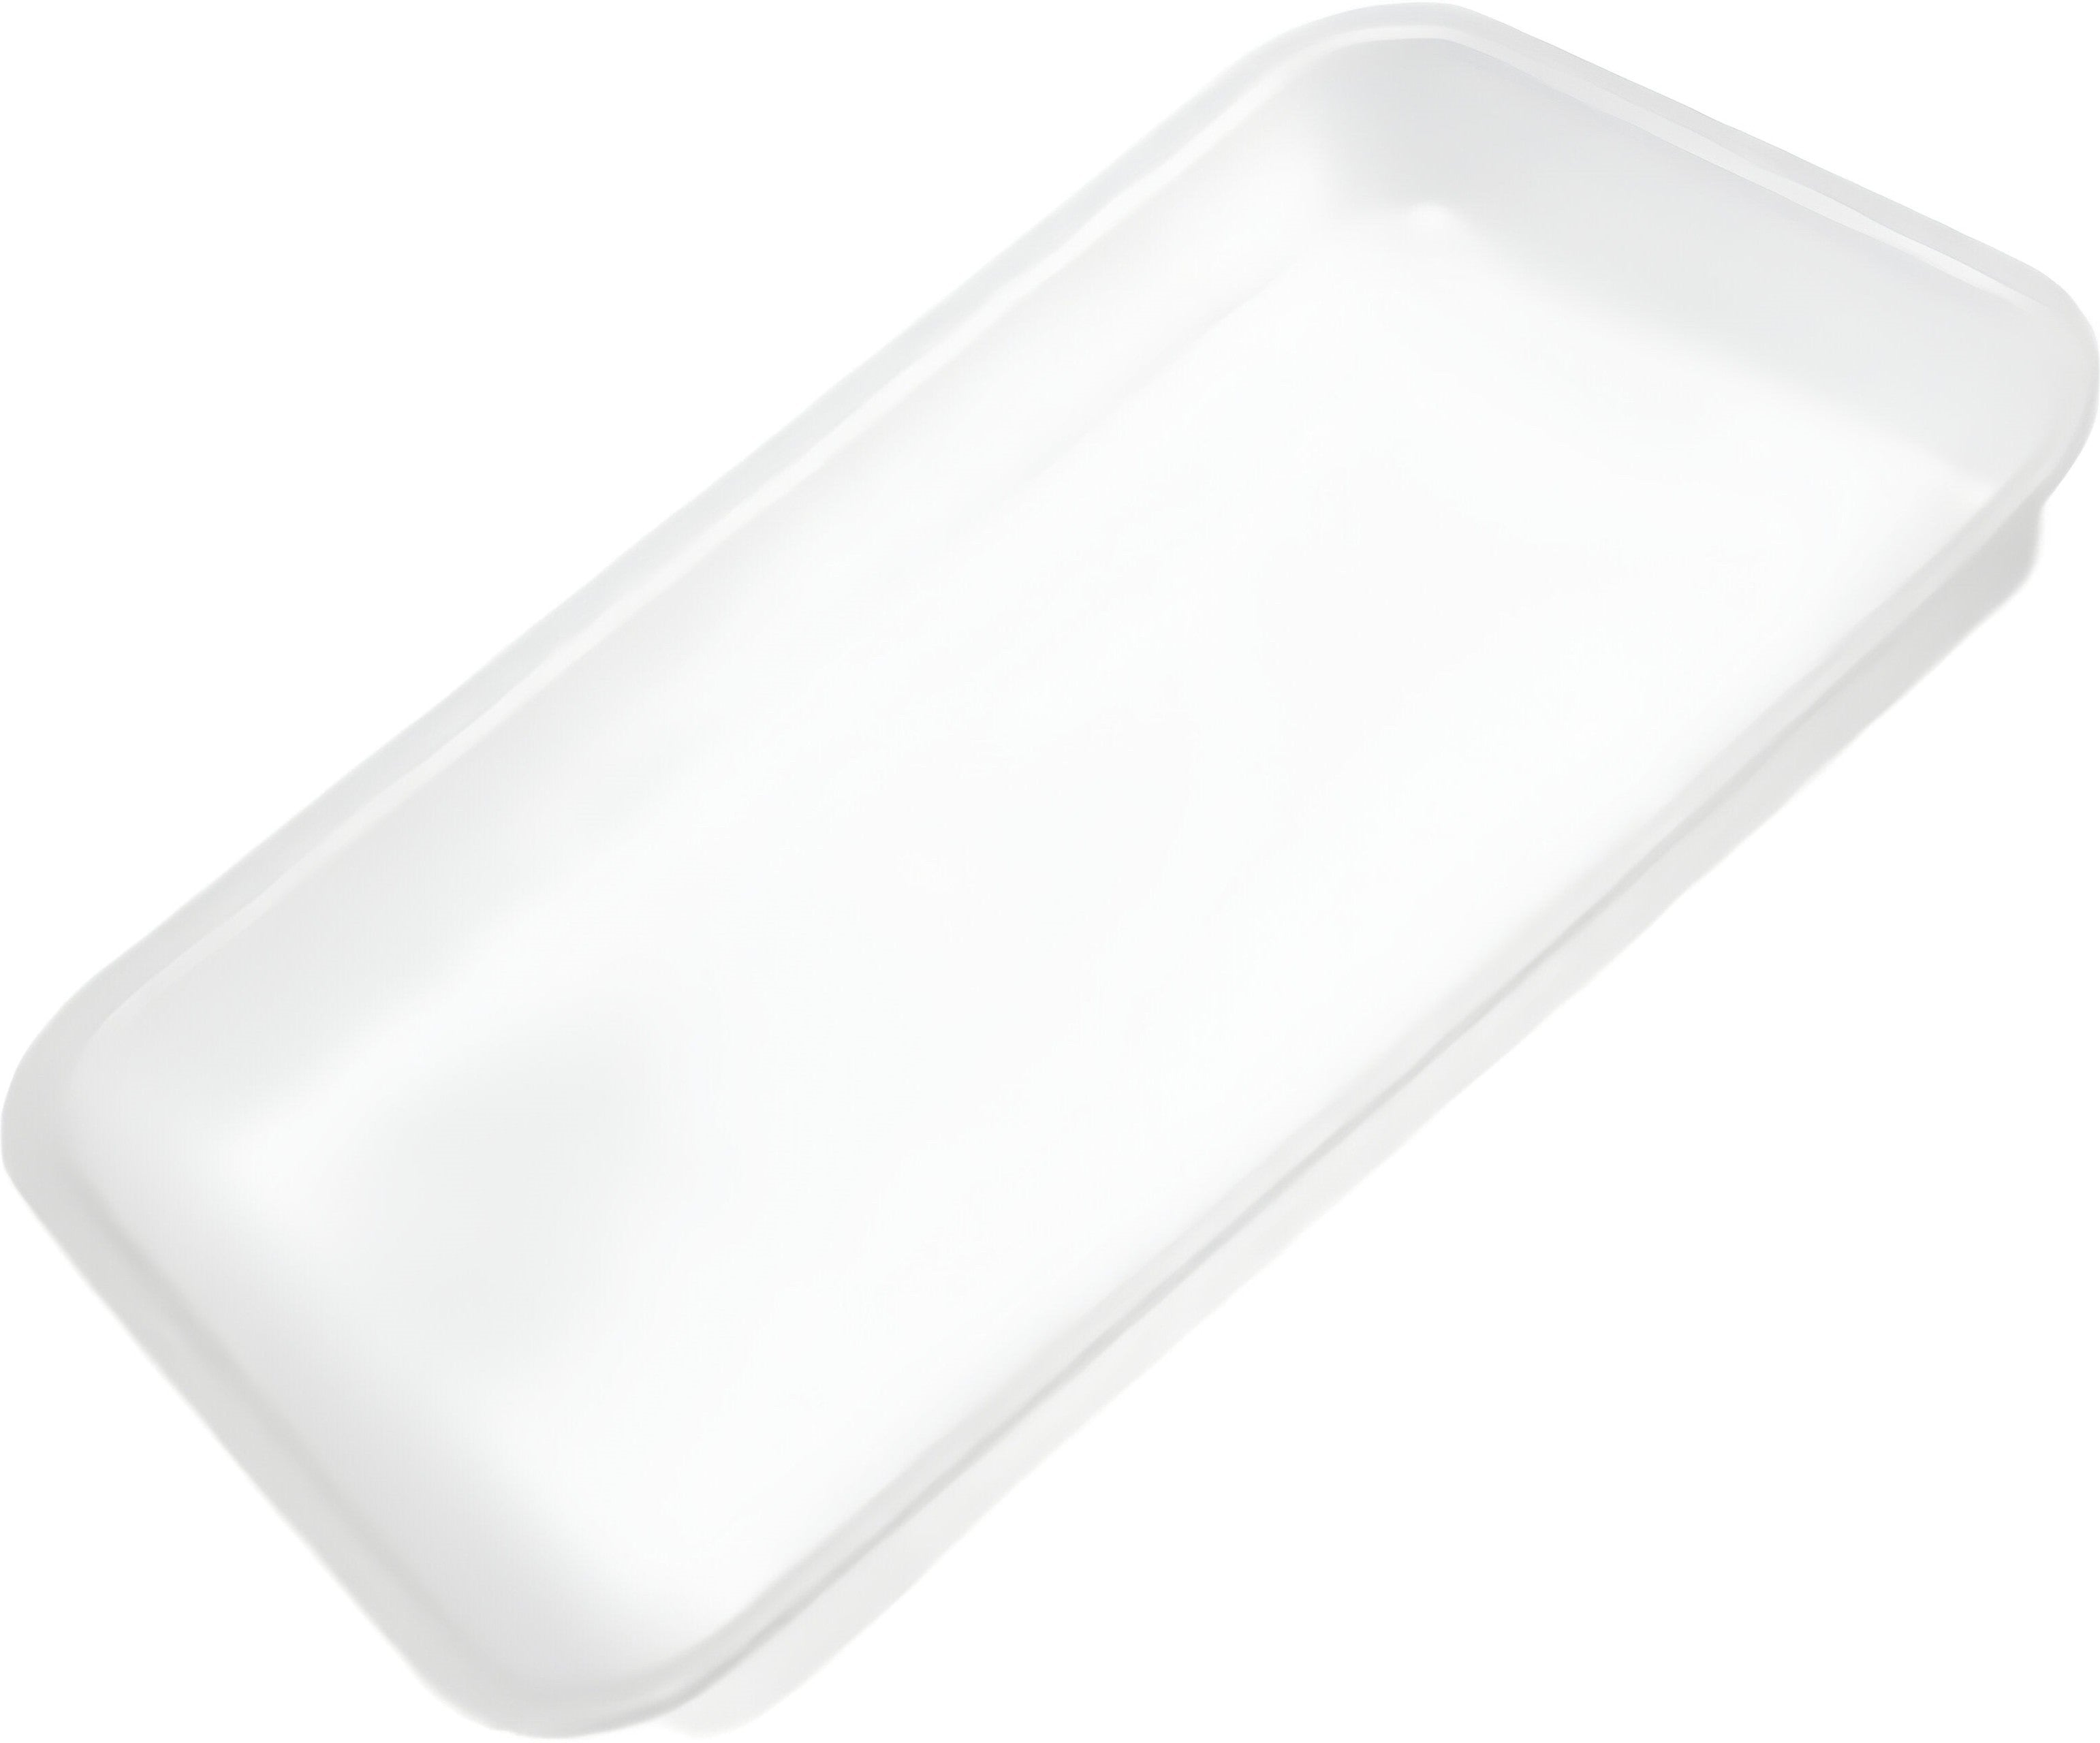 CKF Inc. - 8.66 x 14 x 1.58", 25D White Foam Padded Tray, 100/Cs - 88157